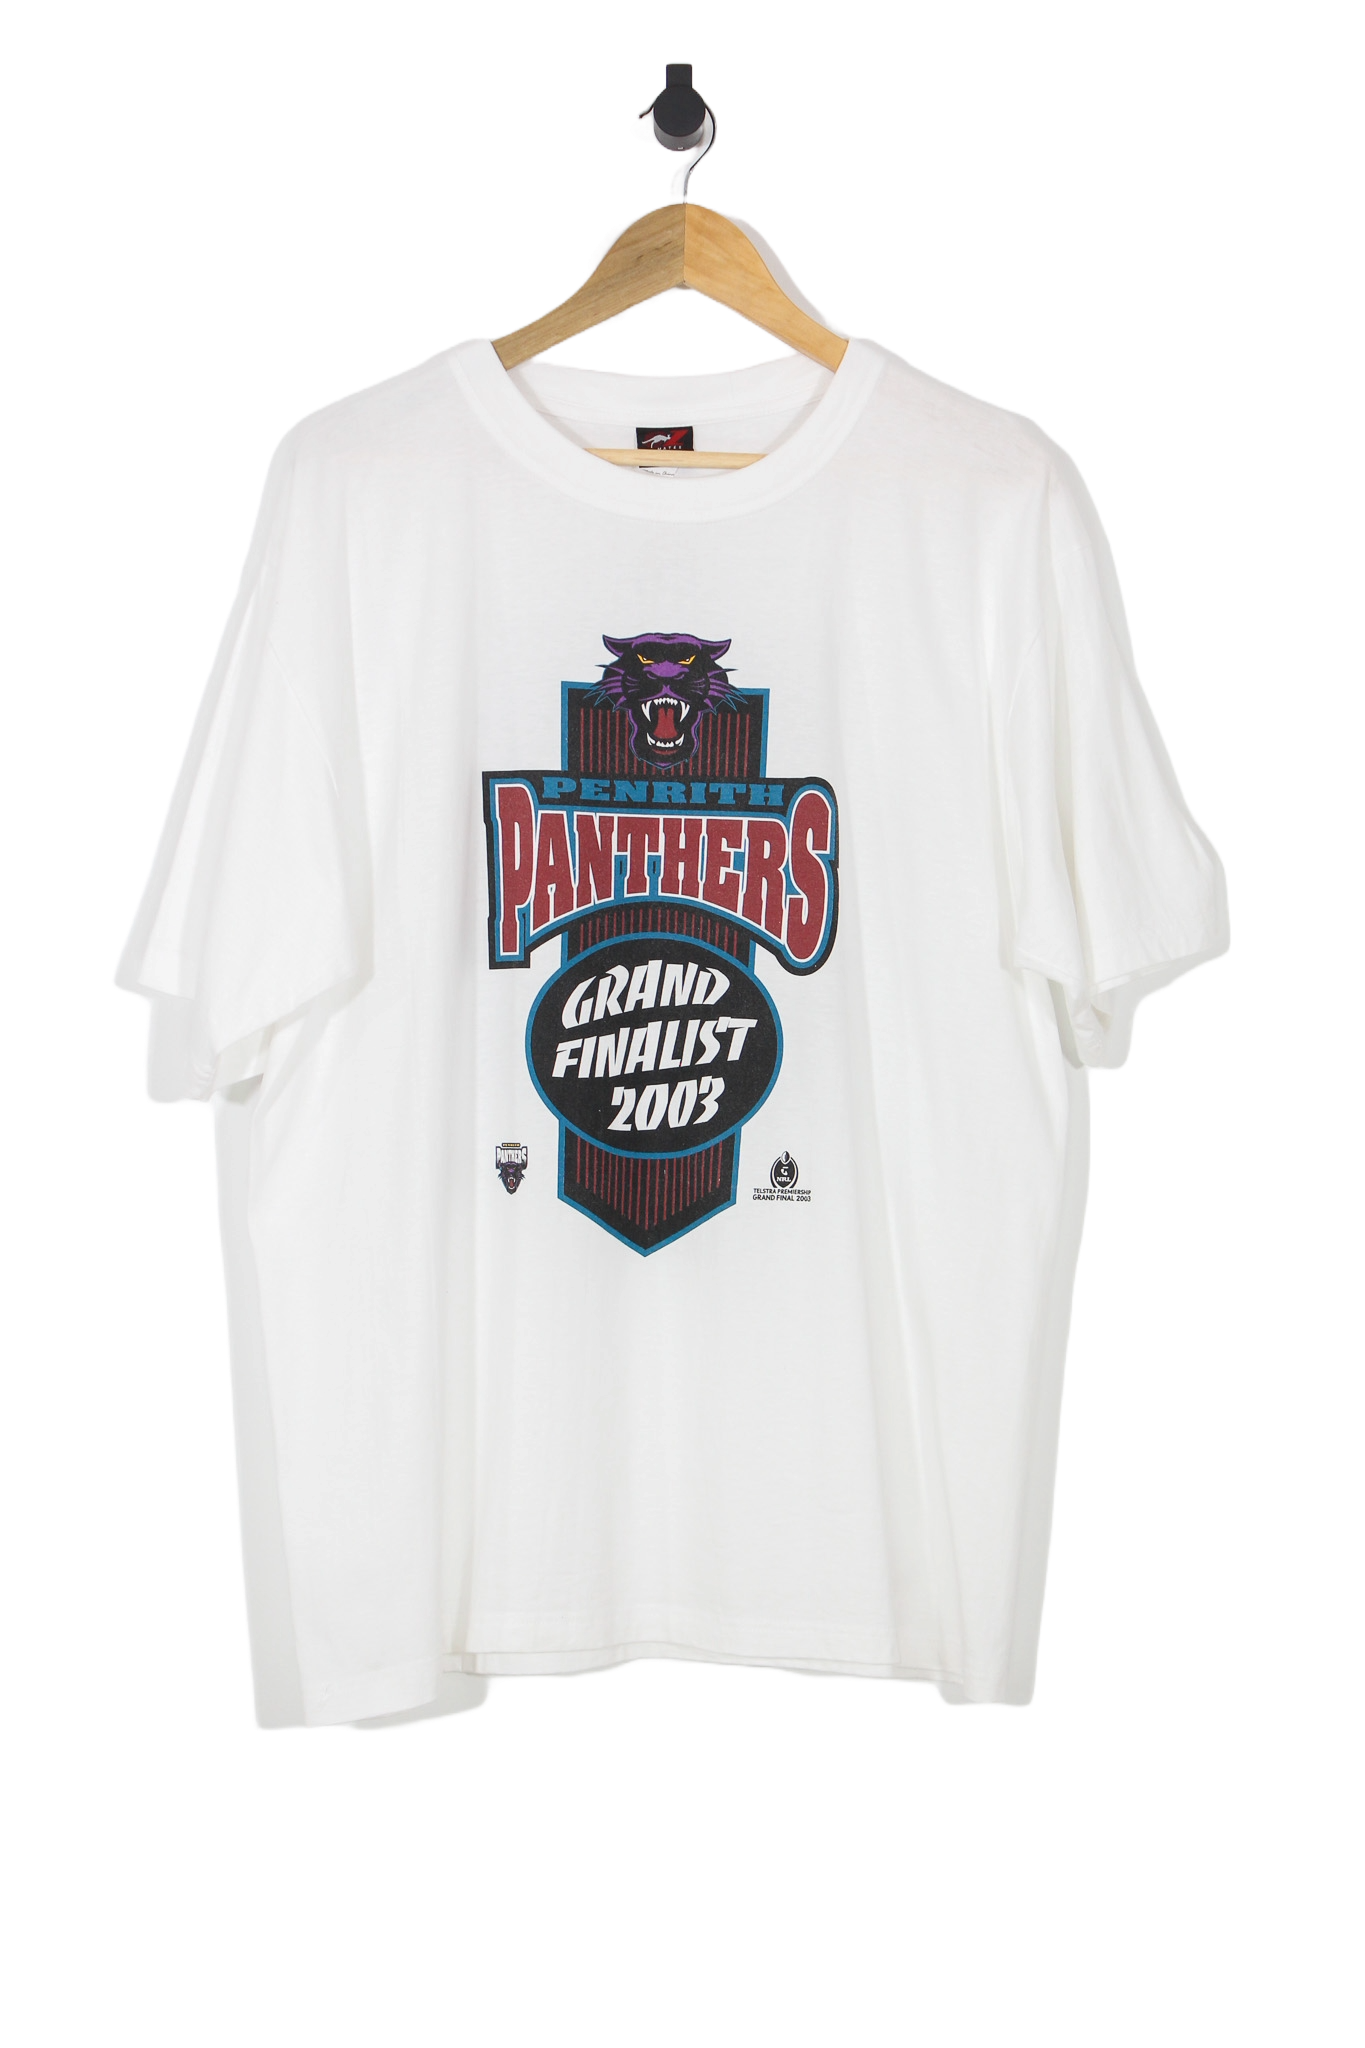 Vintage 2003 Penrith Panthers Grand Finalist NRL T-Shirt - XL